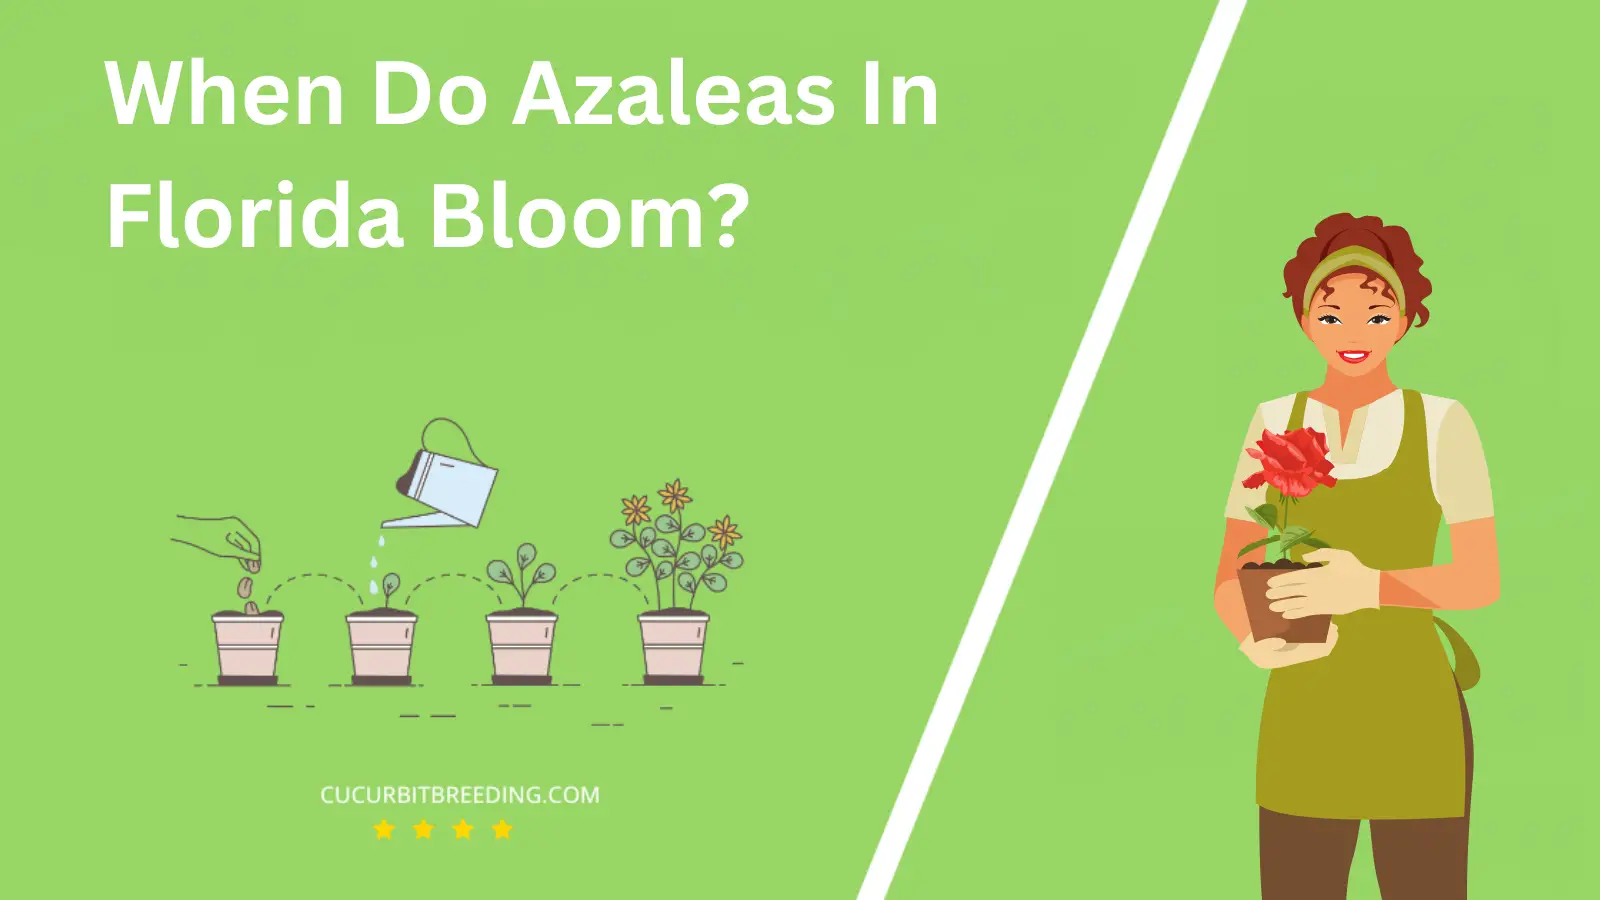 When Do Azaleas In Florida Bloom?